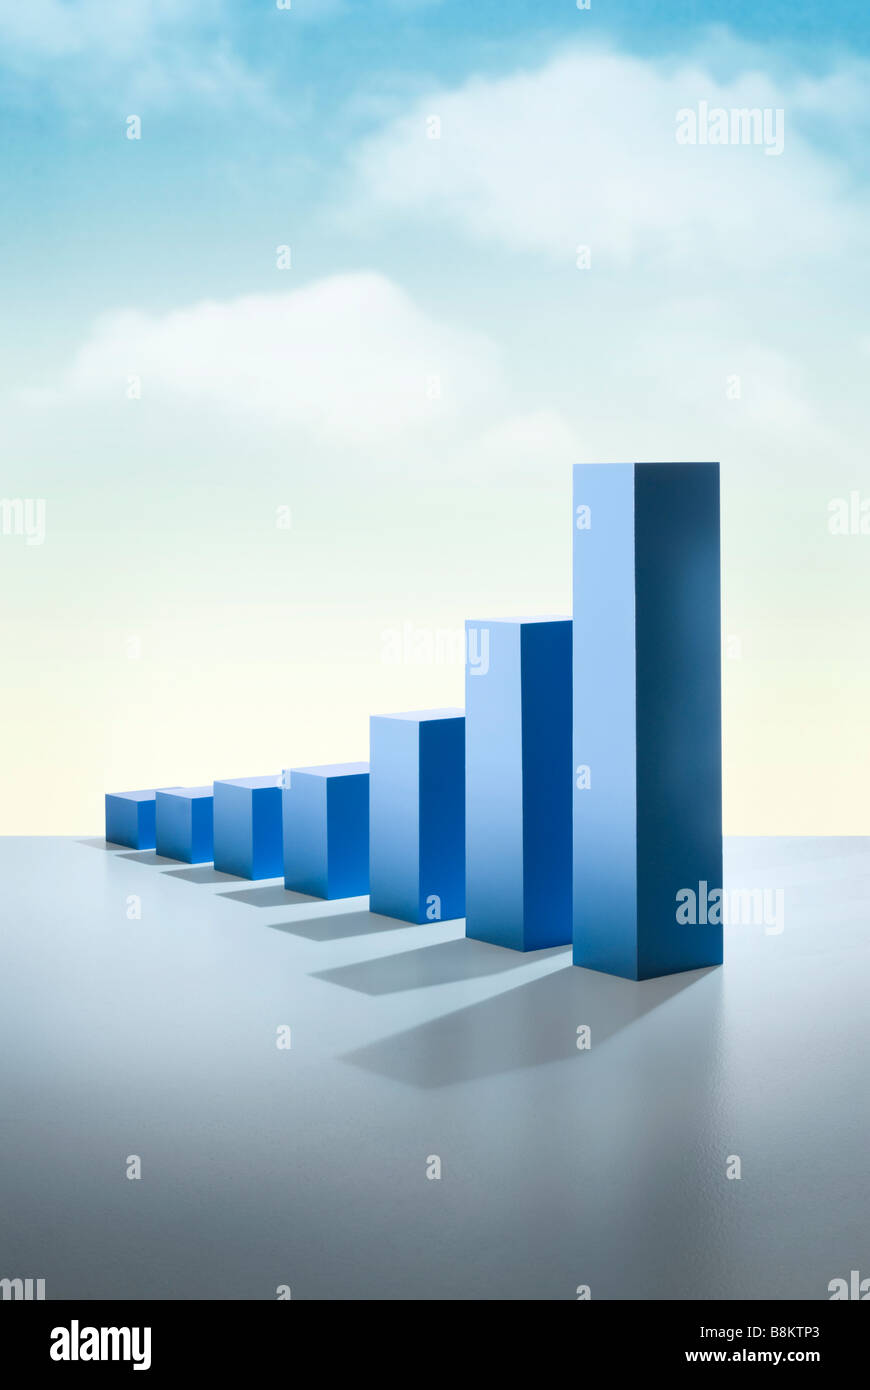 Bar graph showing an upward trend Stock Photo